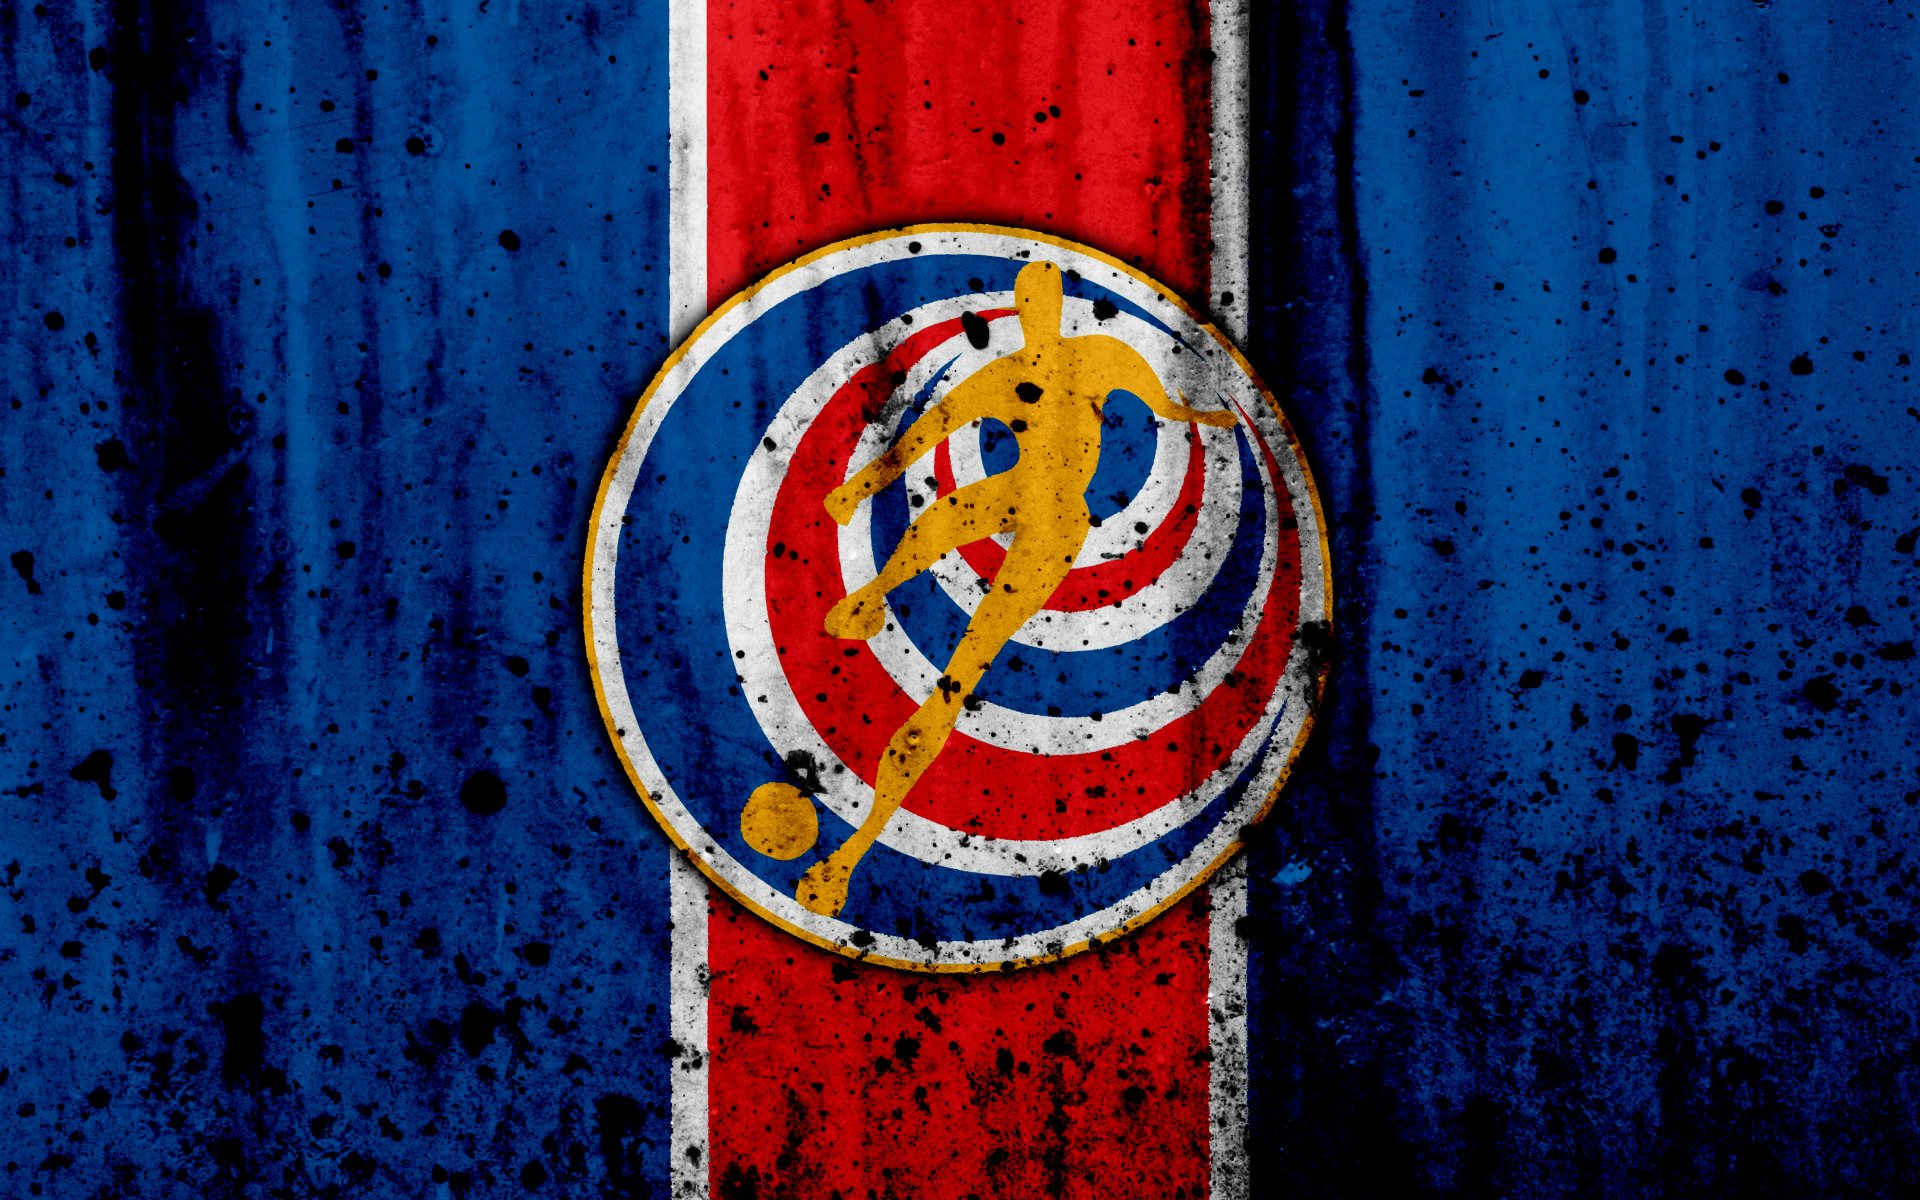 Costa Rica National Football Team 4k Ultra HD Wallpaper